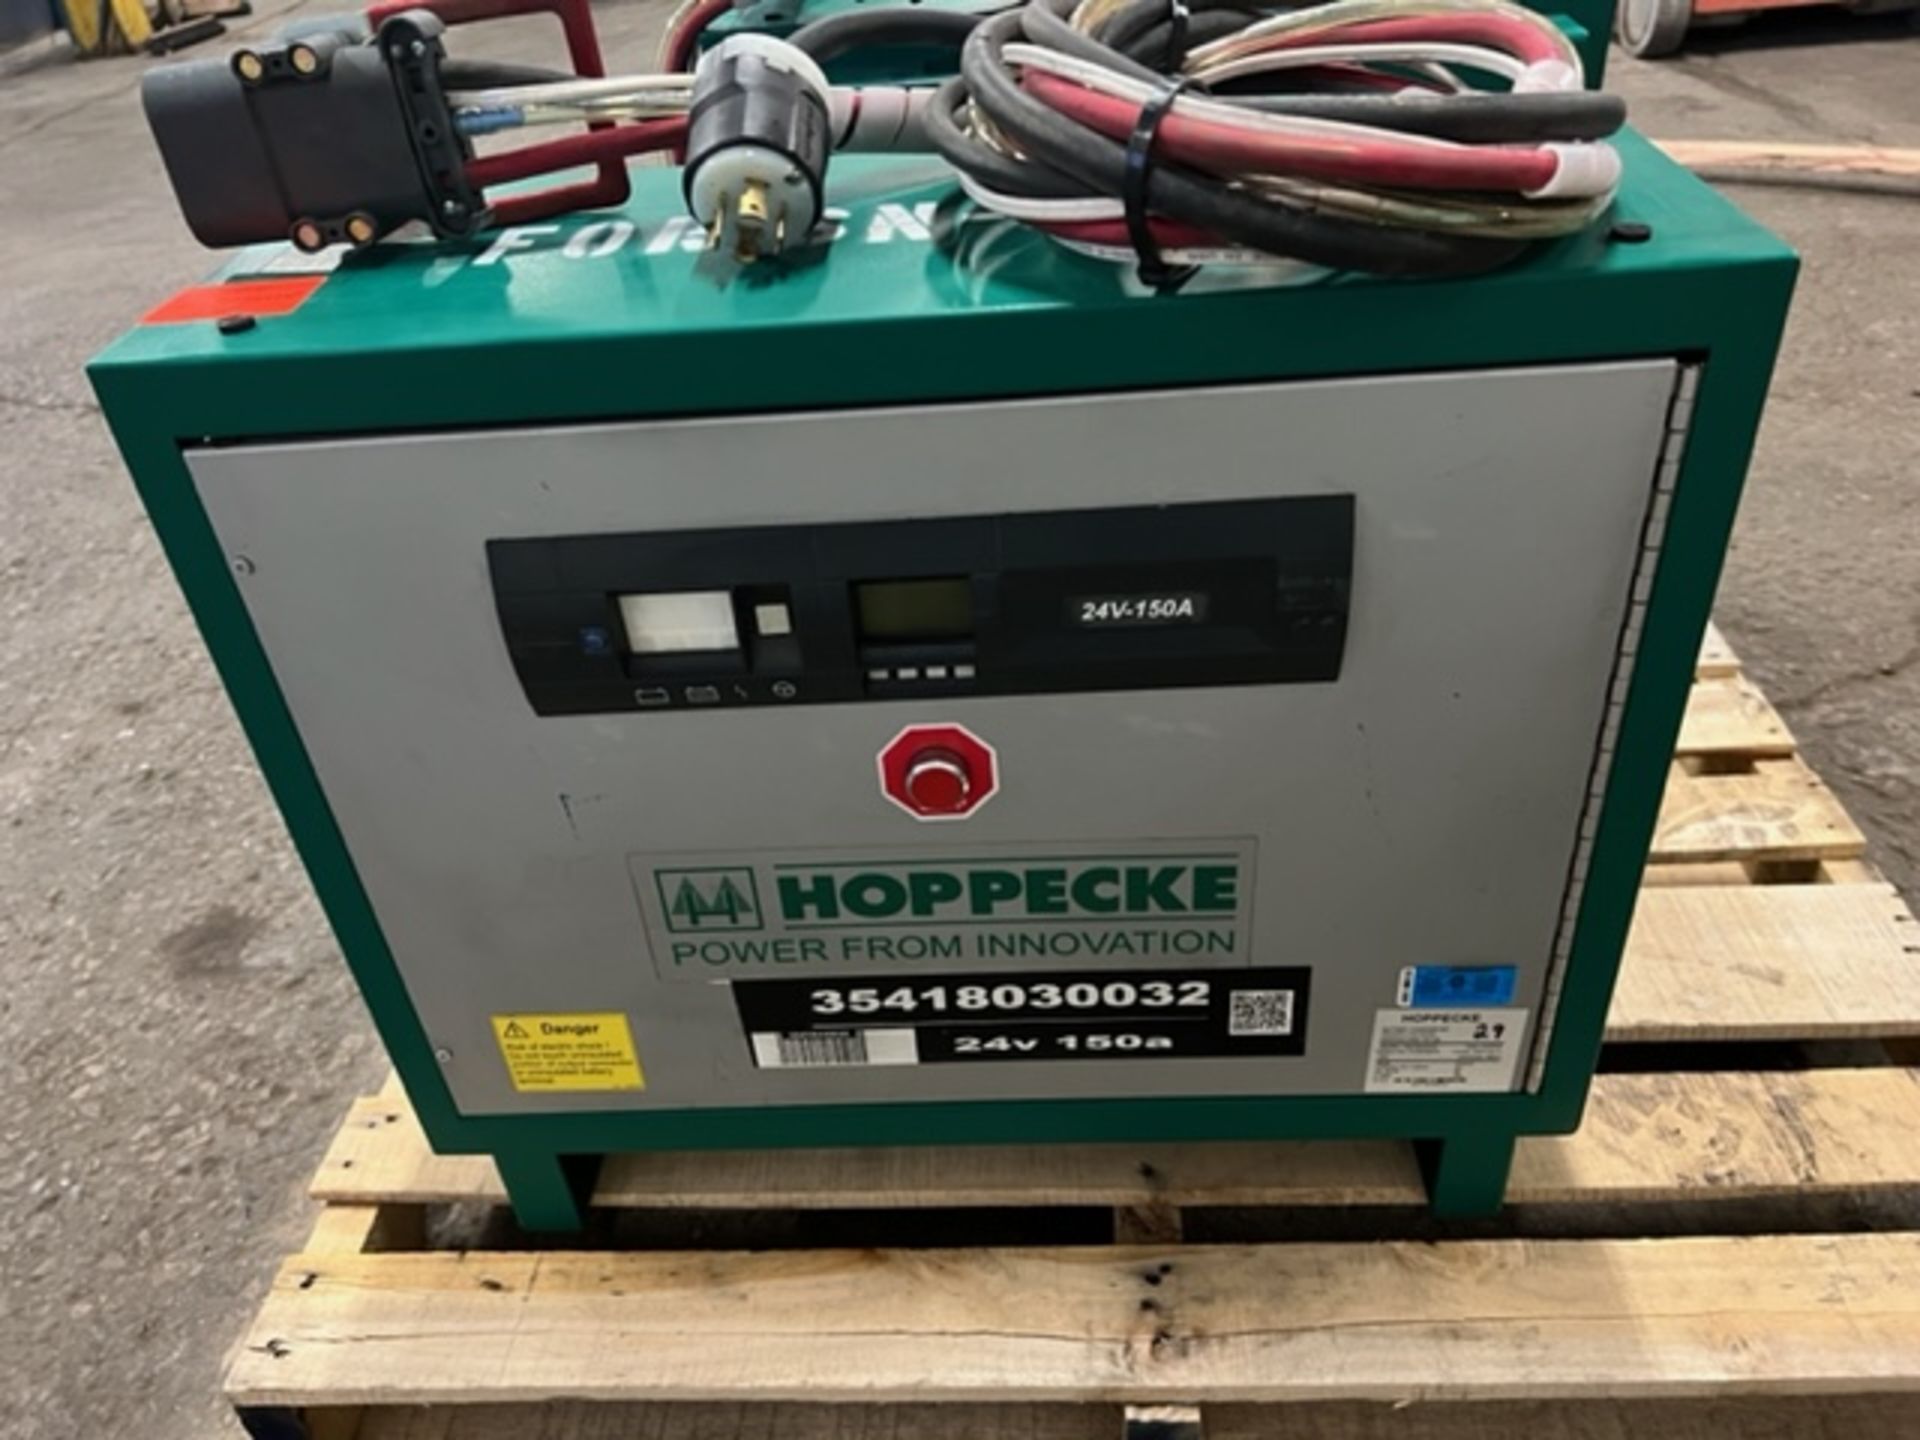 NICE 2018 Hoppecke 24V 150 Amp Forklift Battery Charger Unit